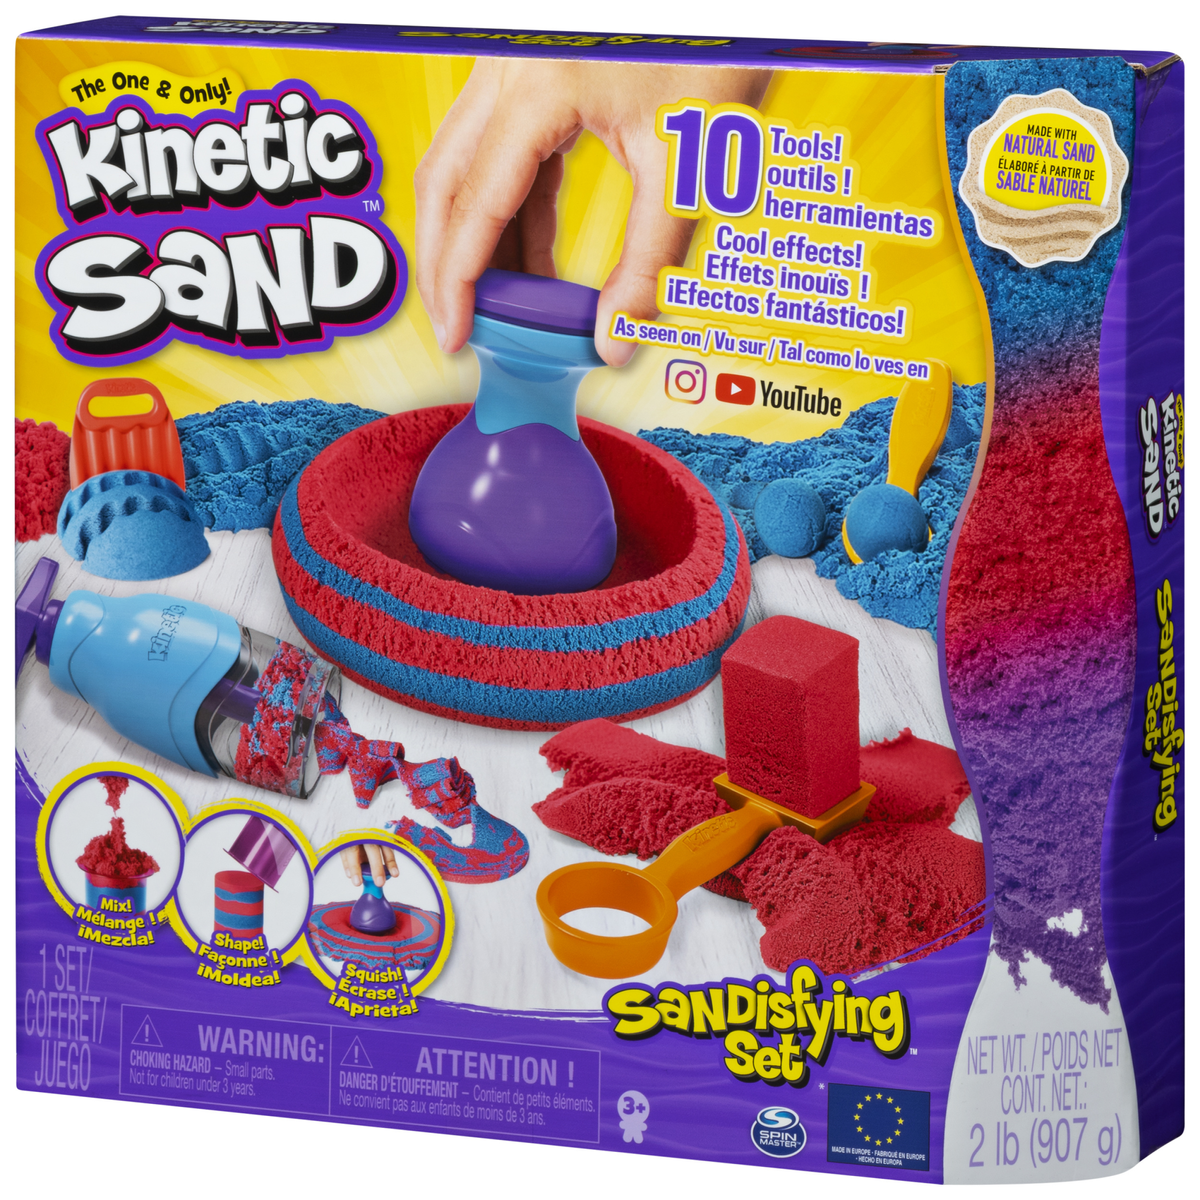 SPIN Sand 907gr Sandisfying Lernspielzeug, MASTER bunt Kinetic Set